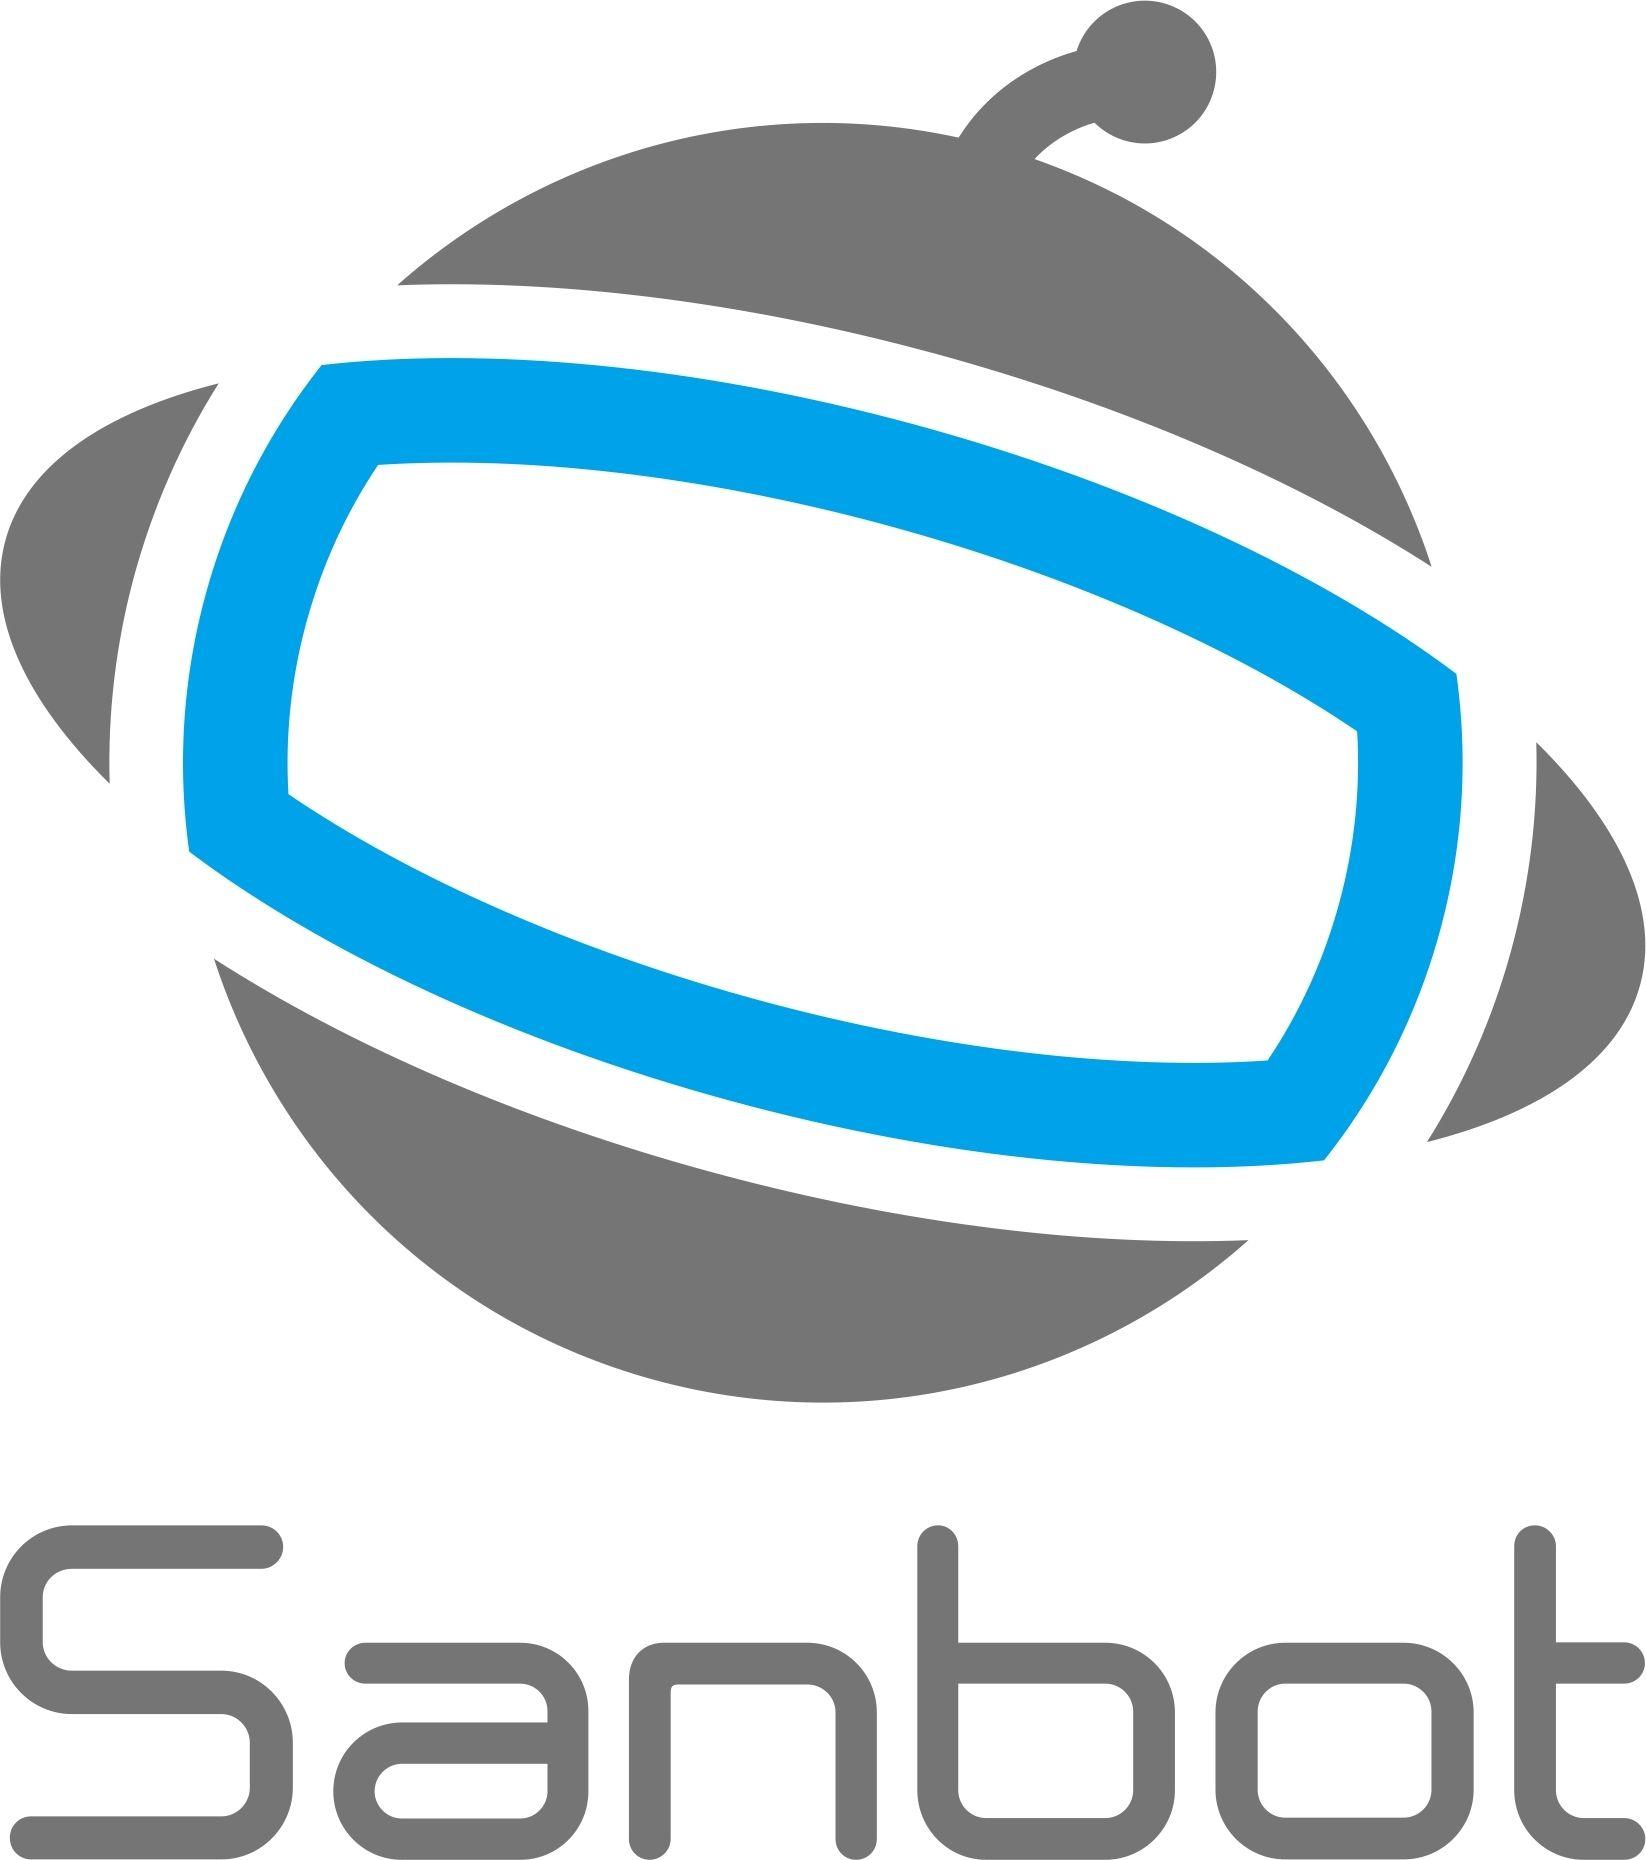 Ai Robot Logo - Introducing Sanbot Nano, an AI Robot for the Home | Business Wire